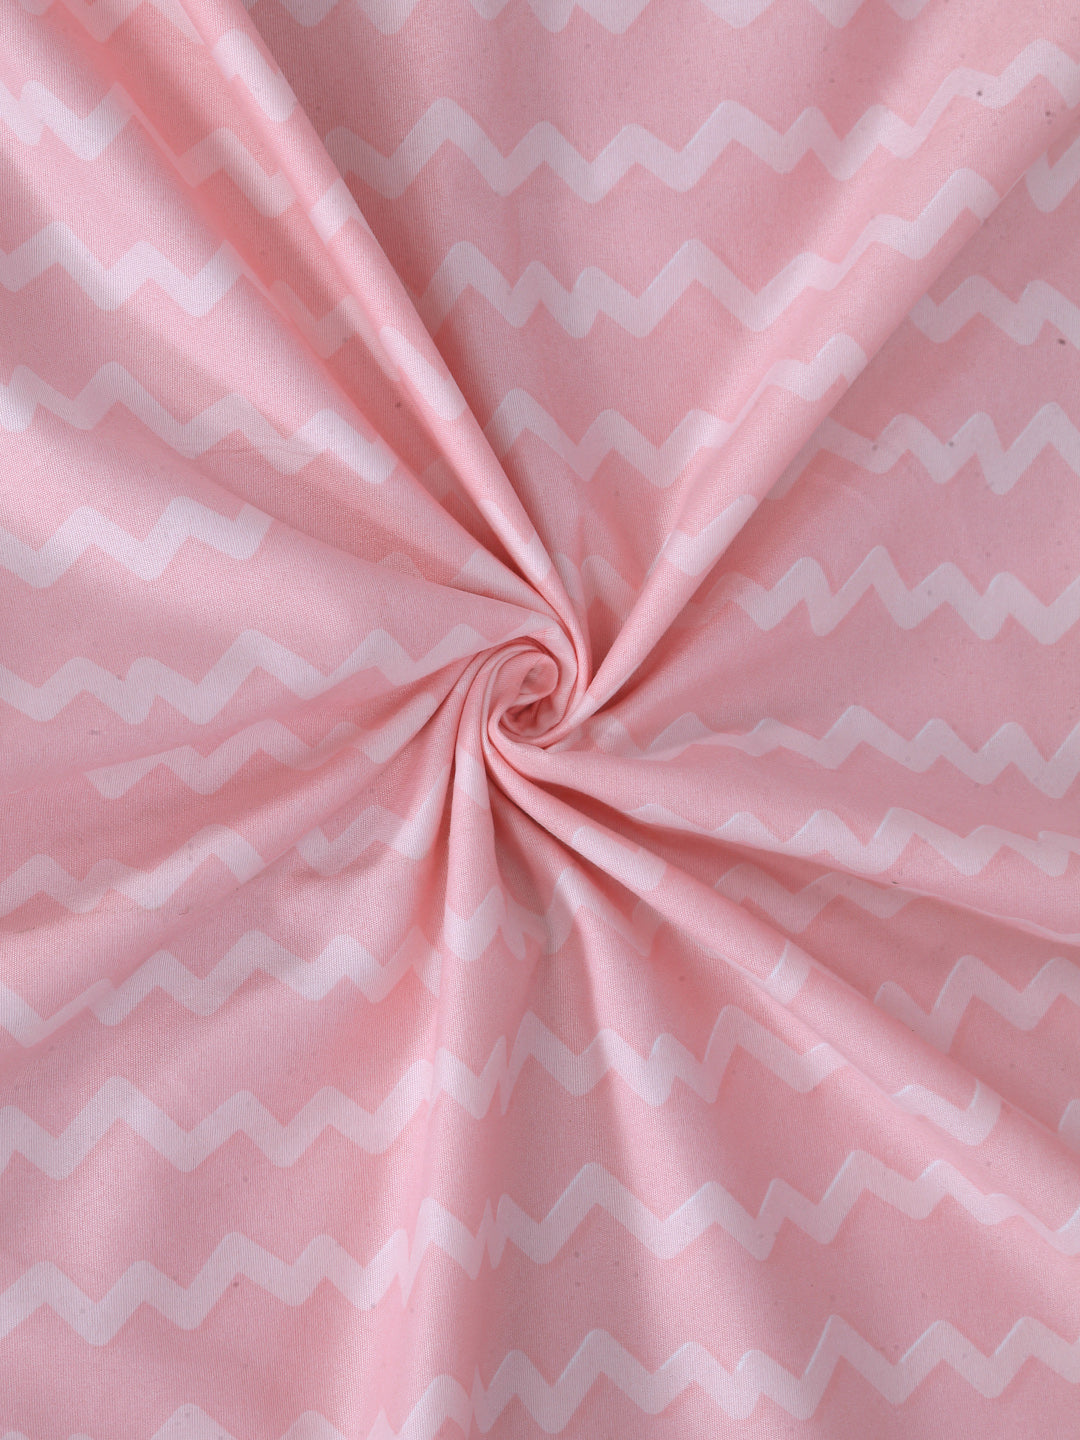 Arrabi Pink Striped TC Cotton Blend Single Size Bedsheet with 1 Pillow Cover (215 x 150 cm)